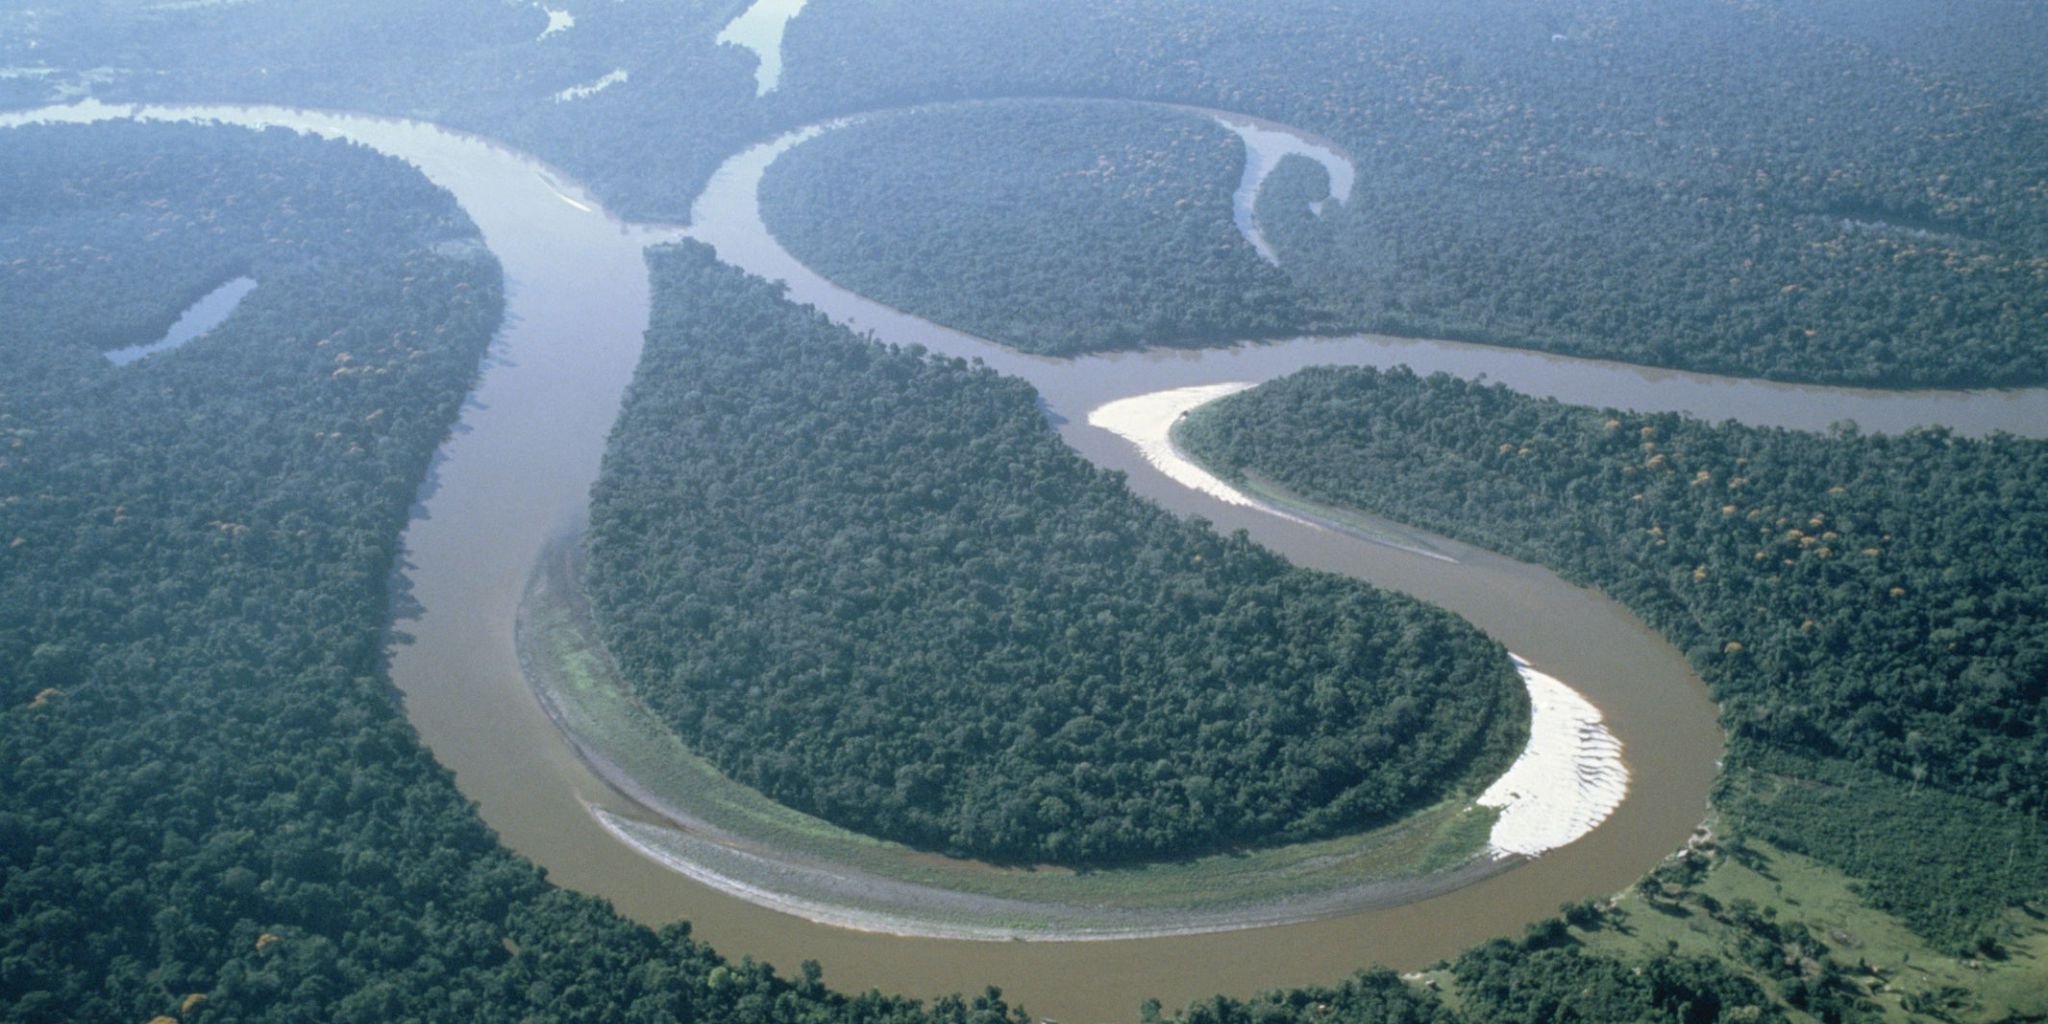 амазонка река впадает в океан